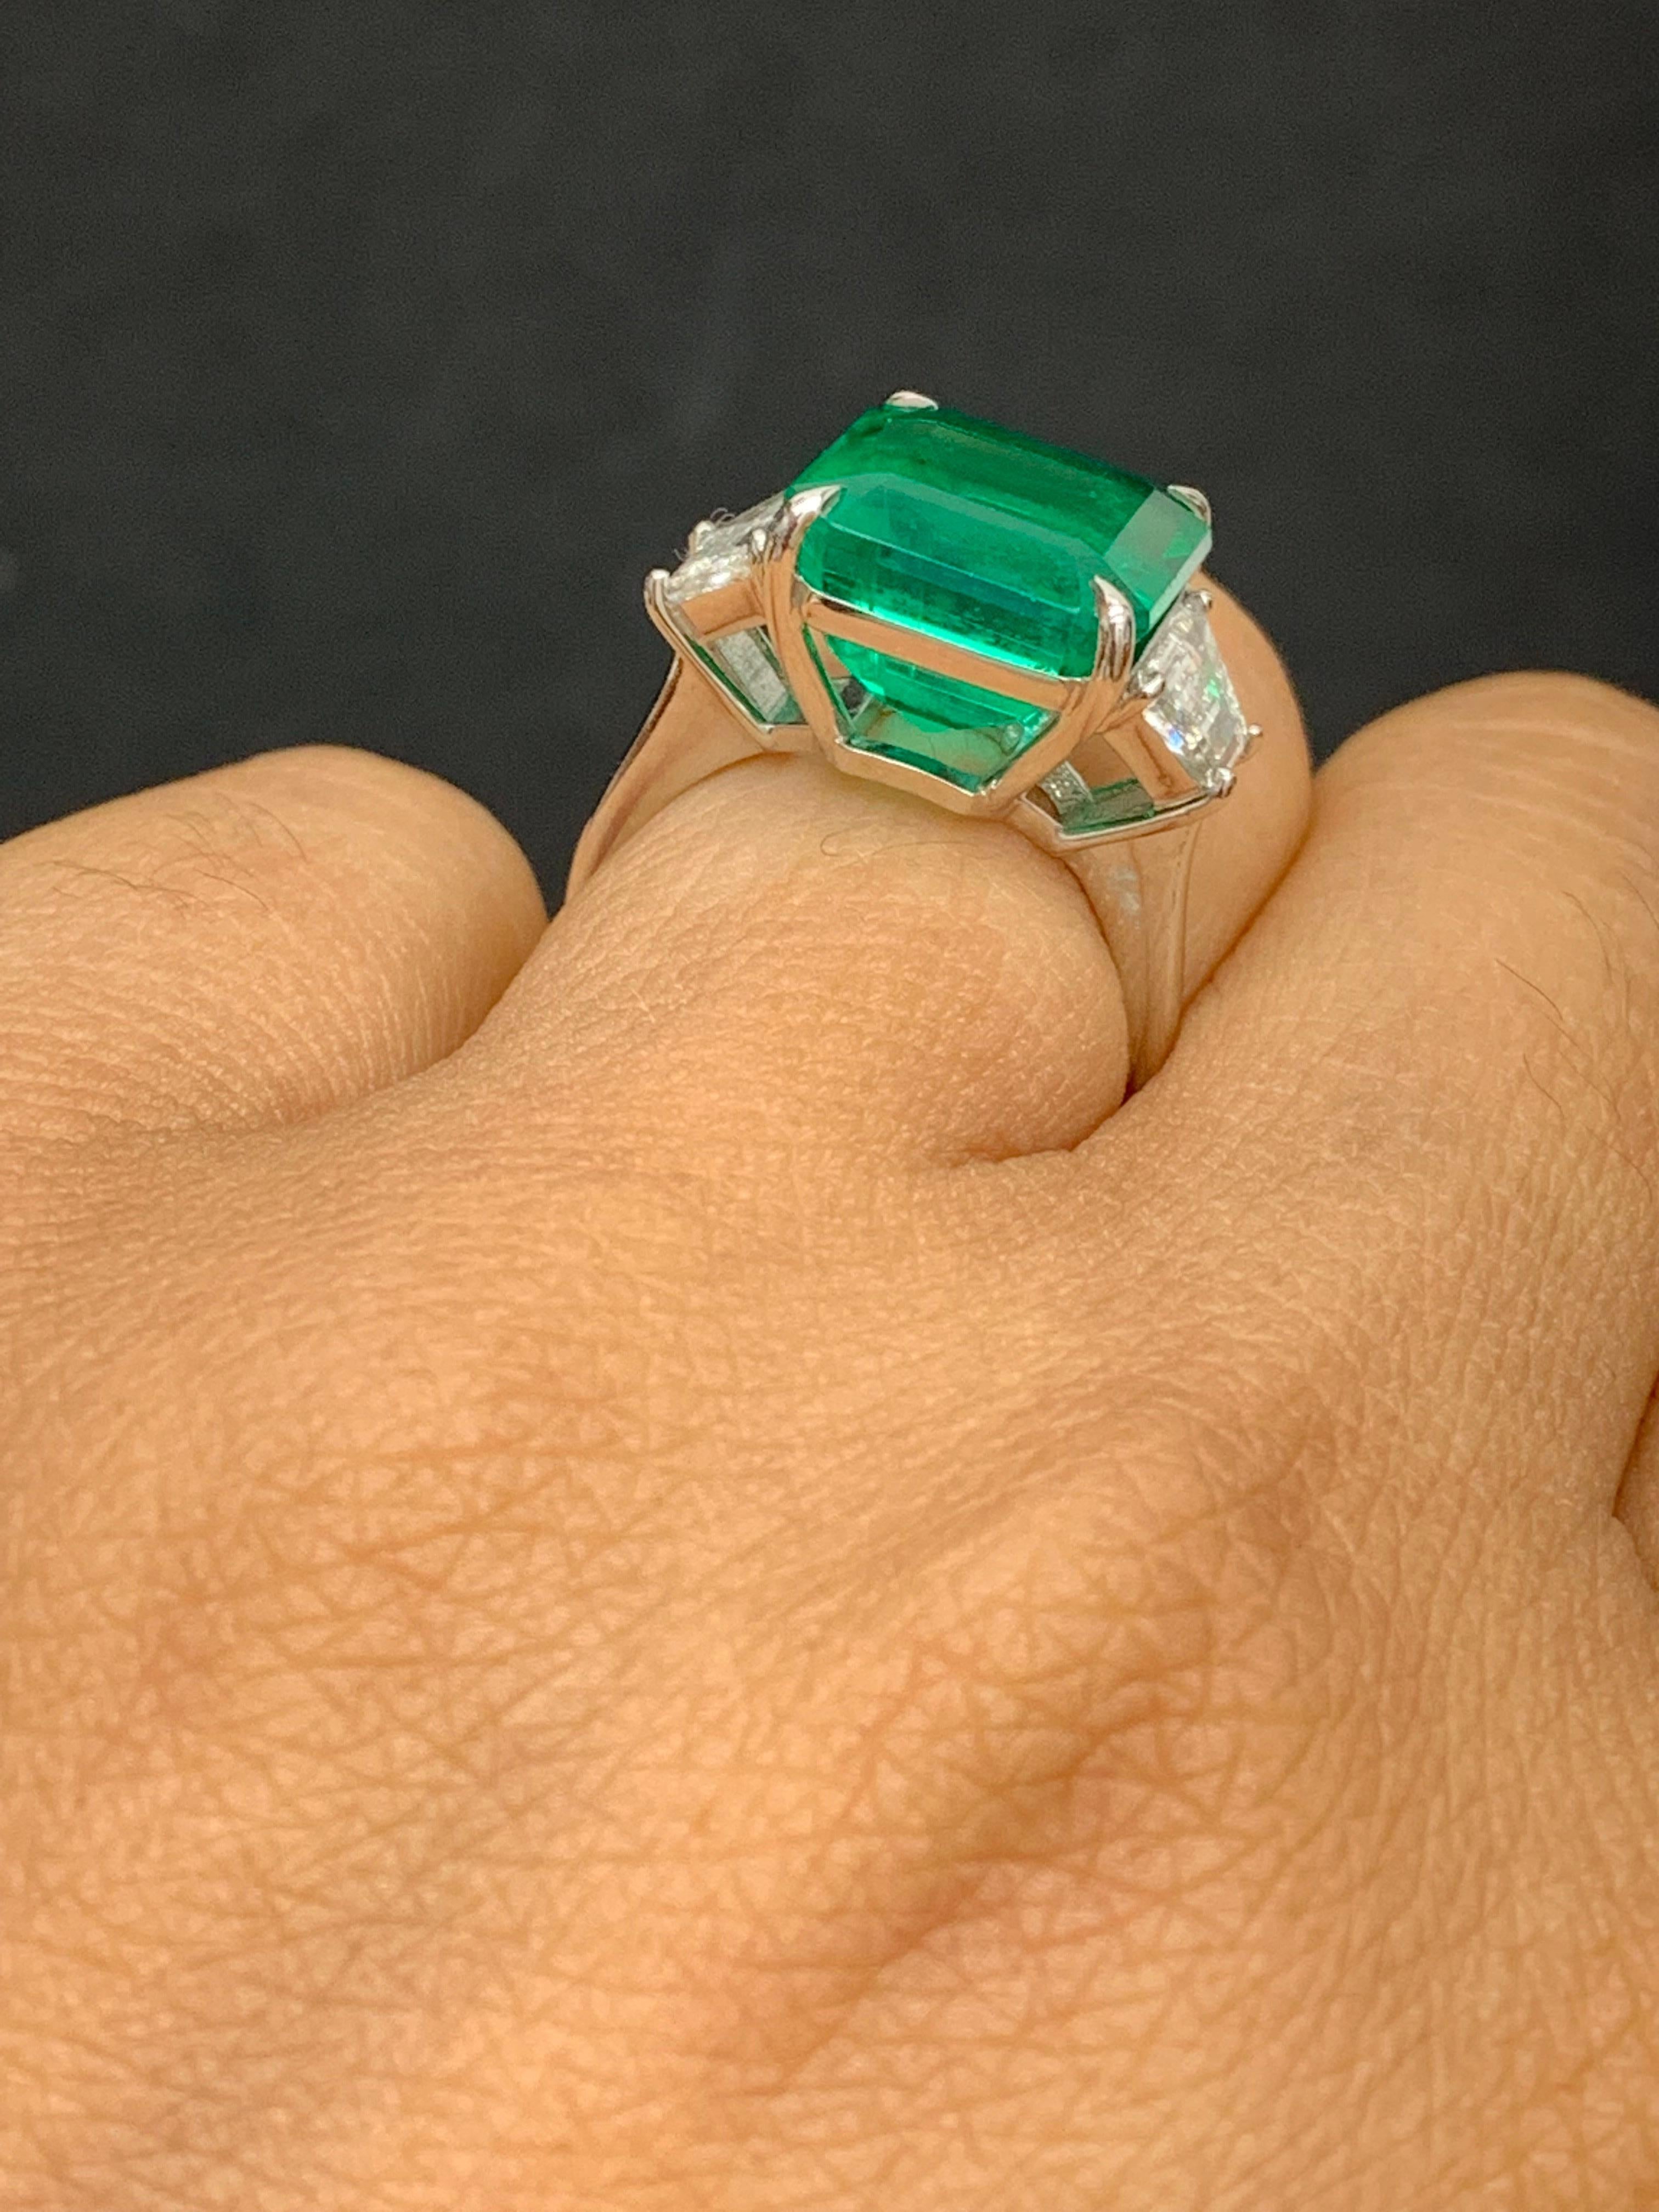 Certified 7.47 Carat Emerald Cut Emerald & Diamond Engagement Ring in Platinum For Sale 2